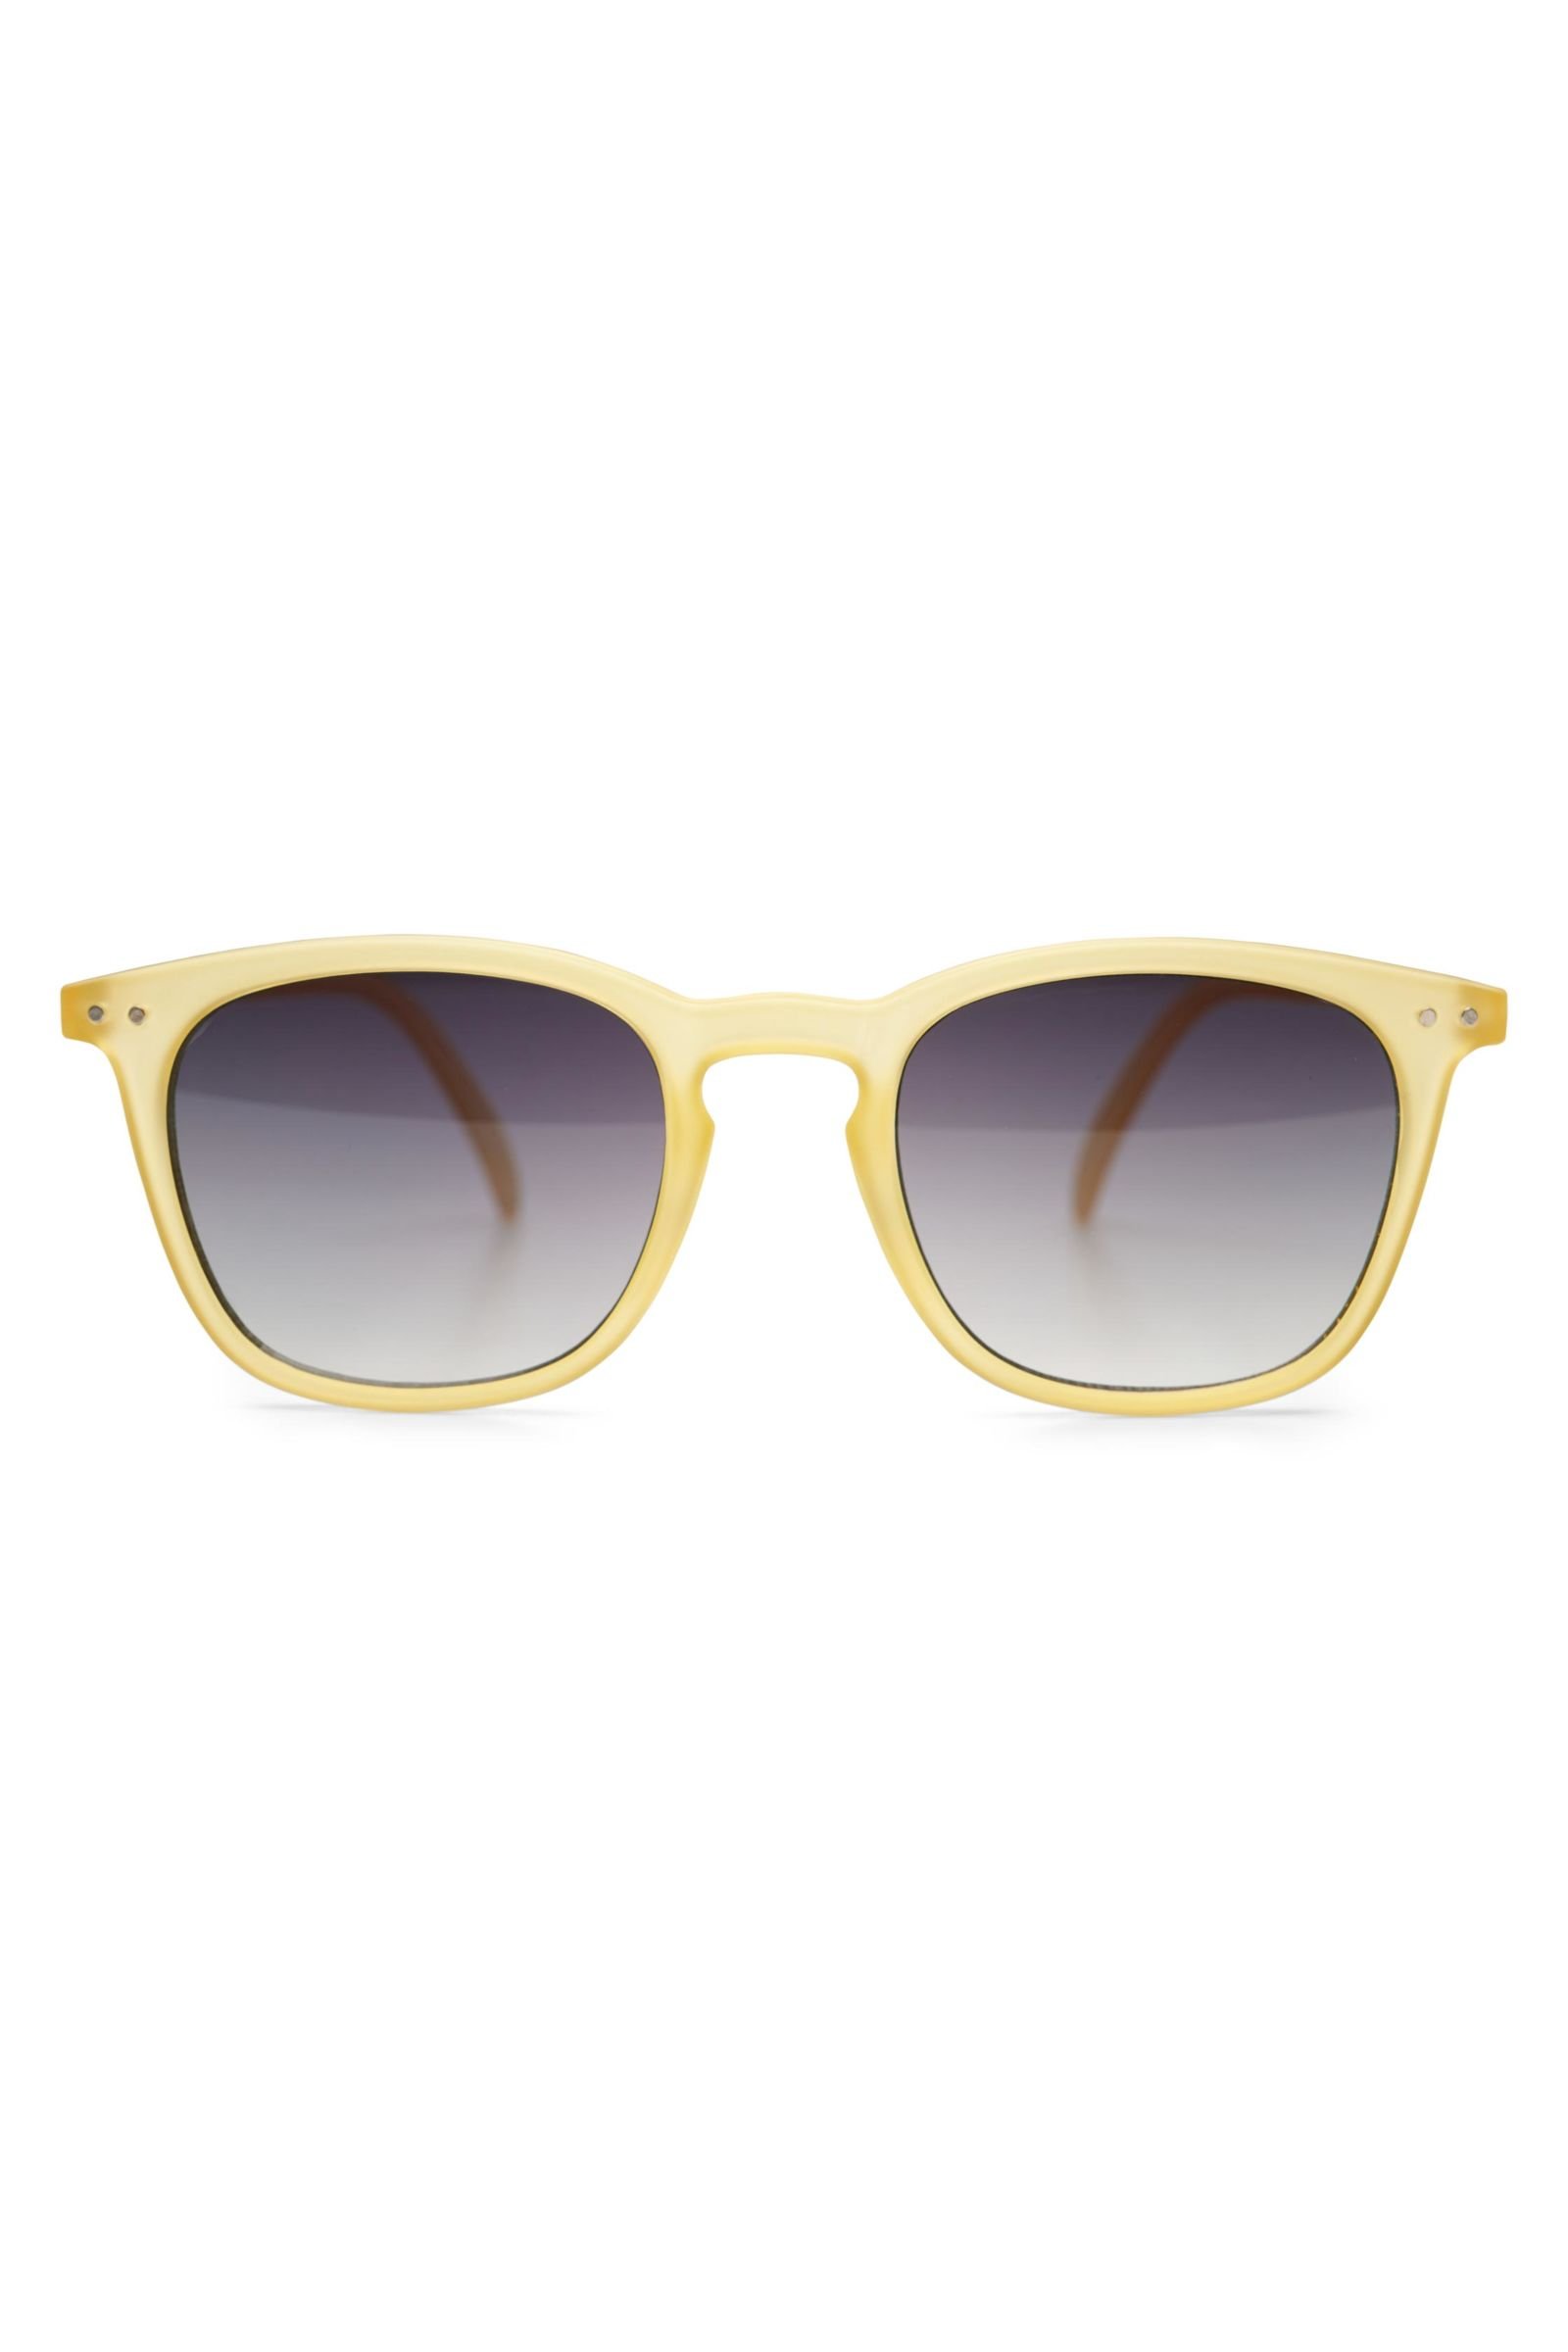 Sunglasses '#E Flash Lights' yellow/grey